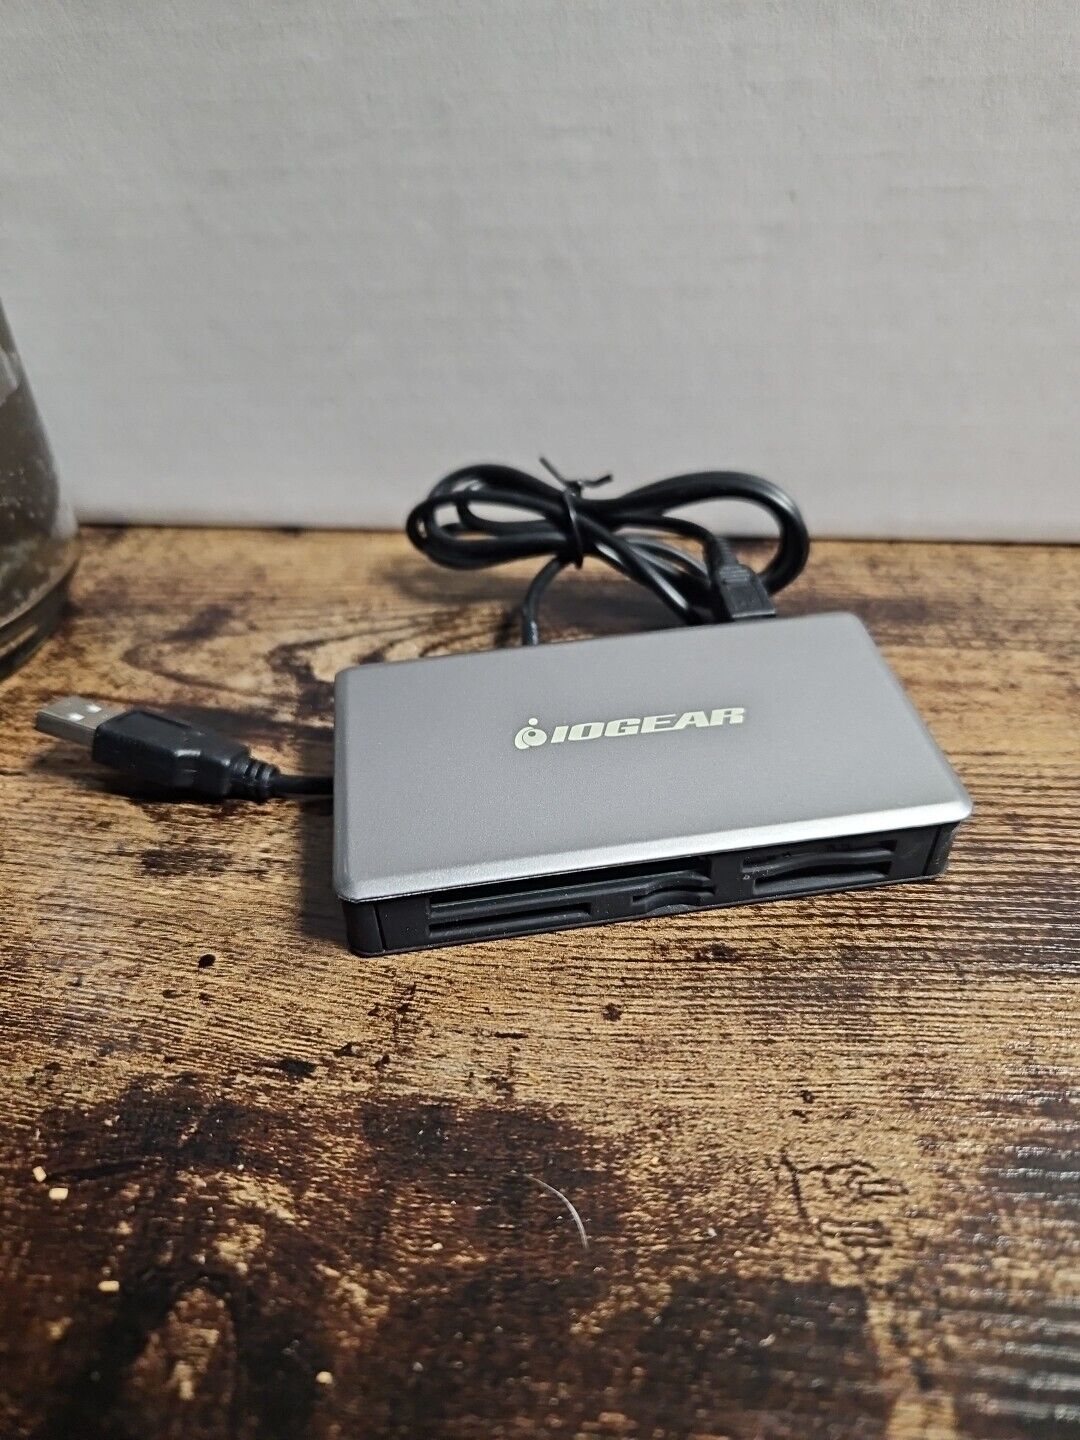 IOGEAR GFR281 Silver Universal USB 2.0 Pocket Flash Memory Card Reader/Writer